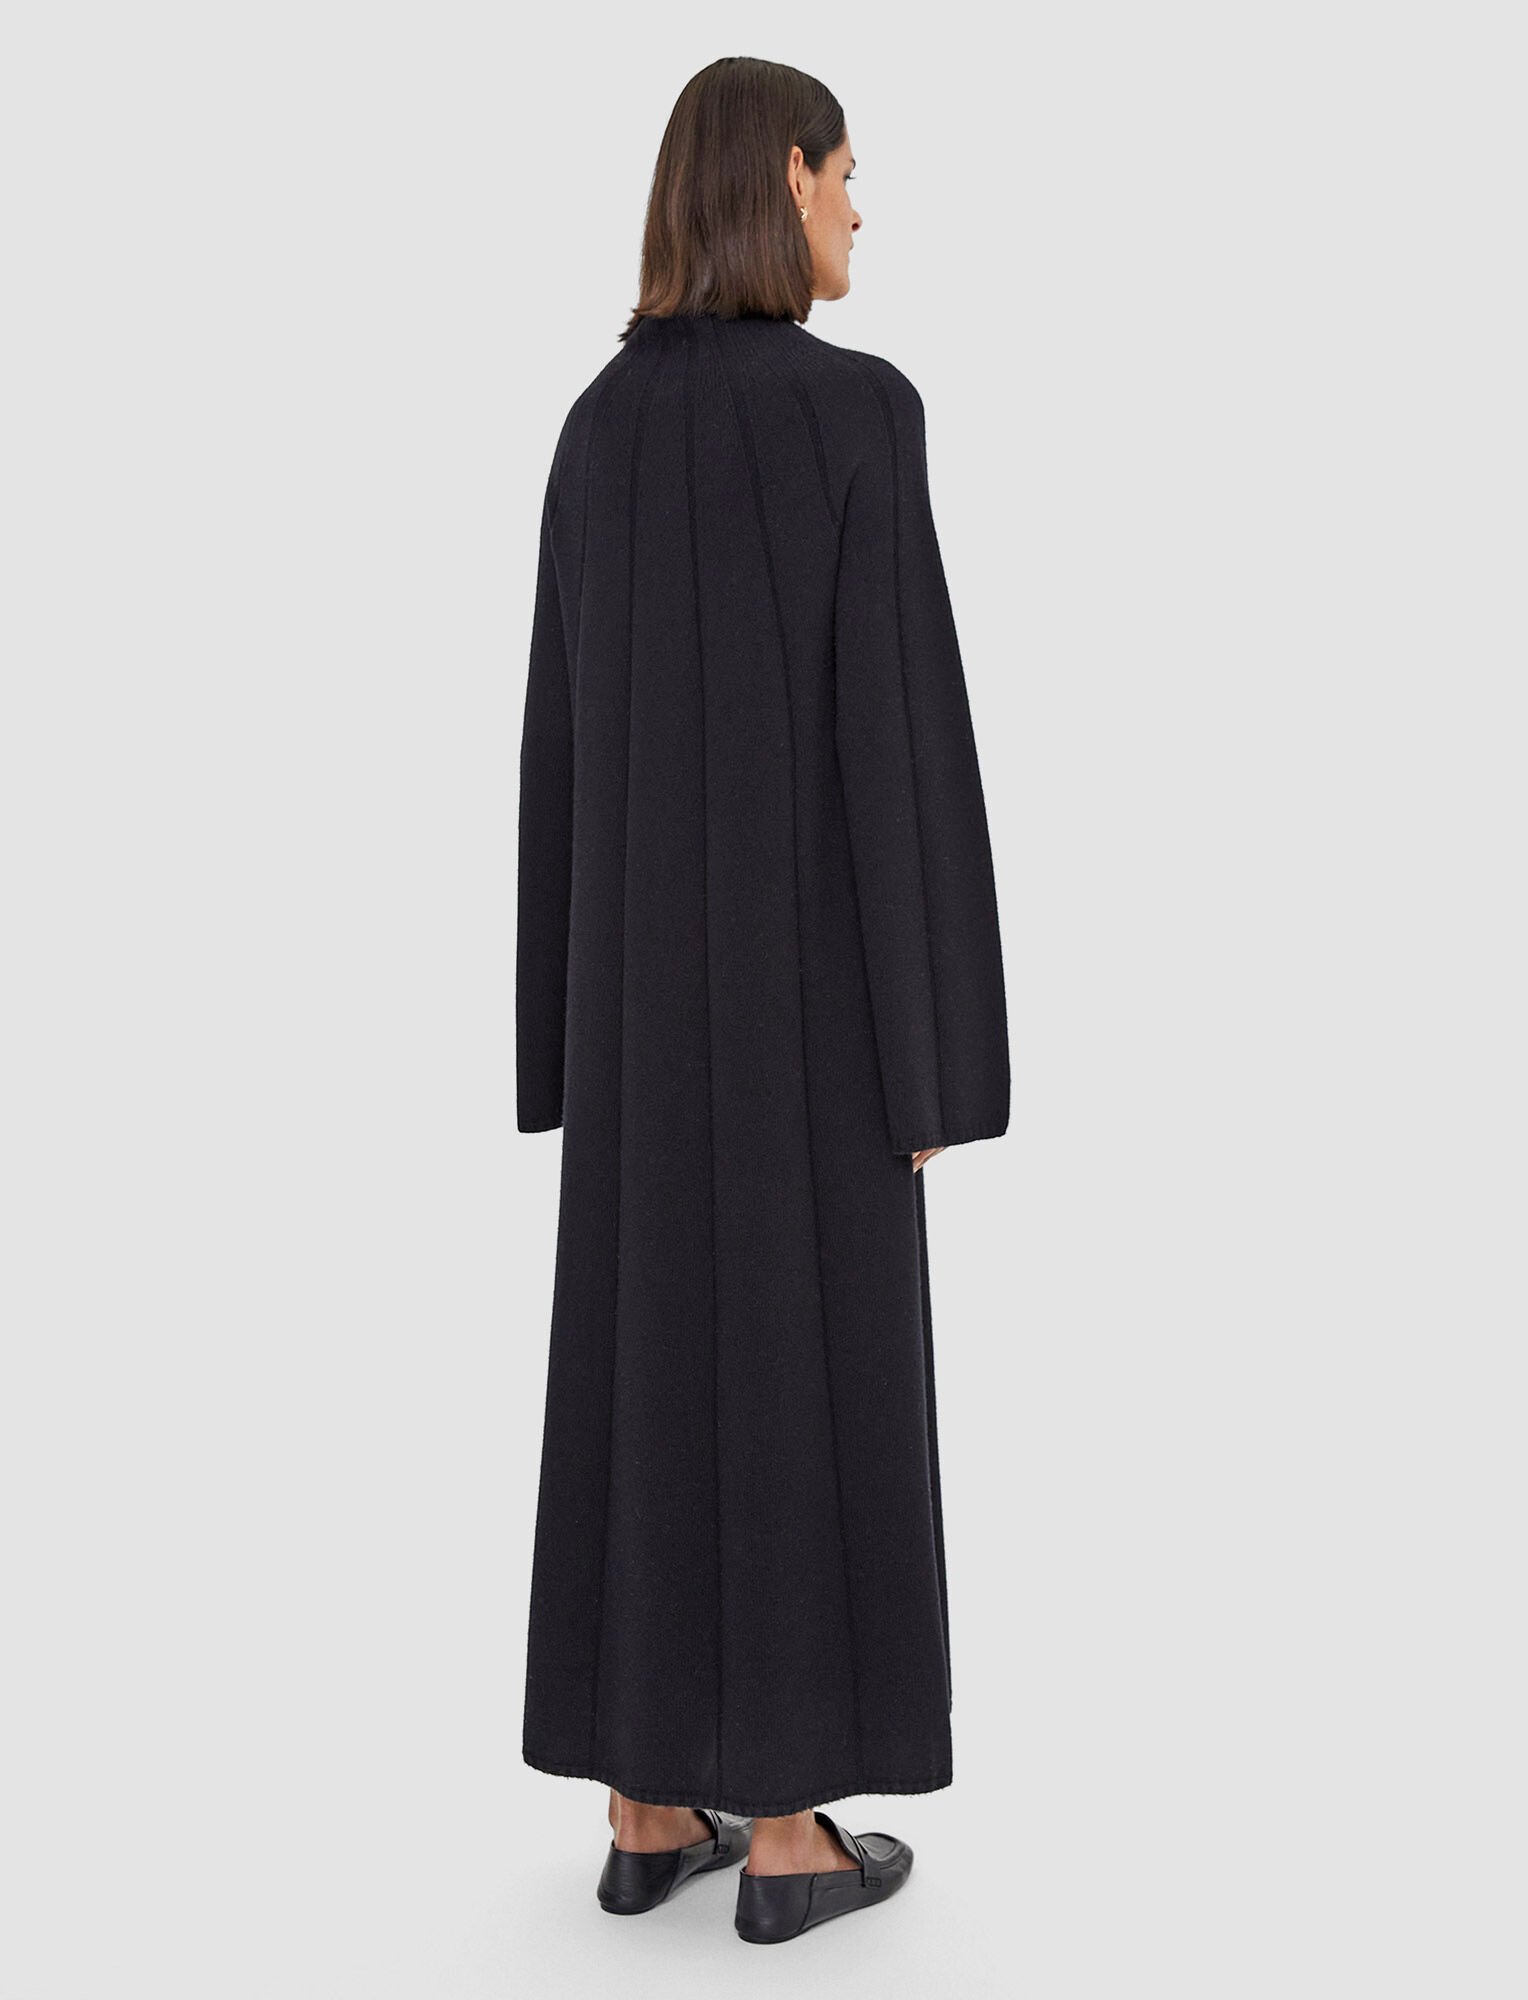 Joseph, Soft Wool Dress, in Black